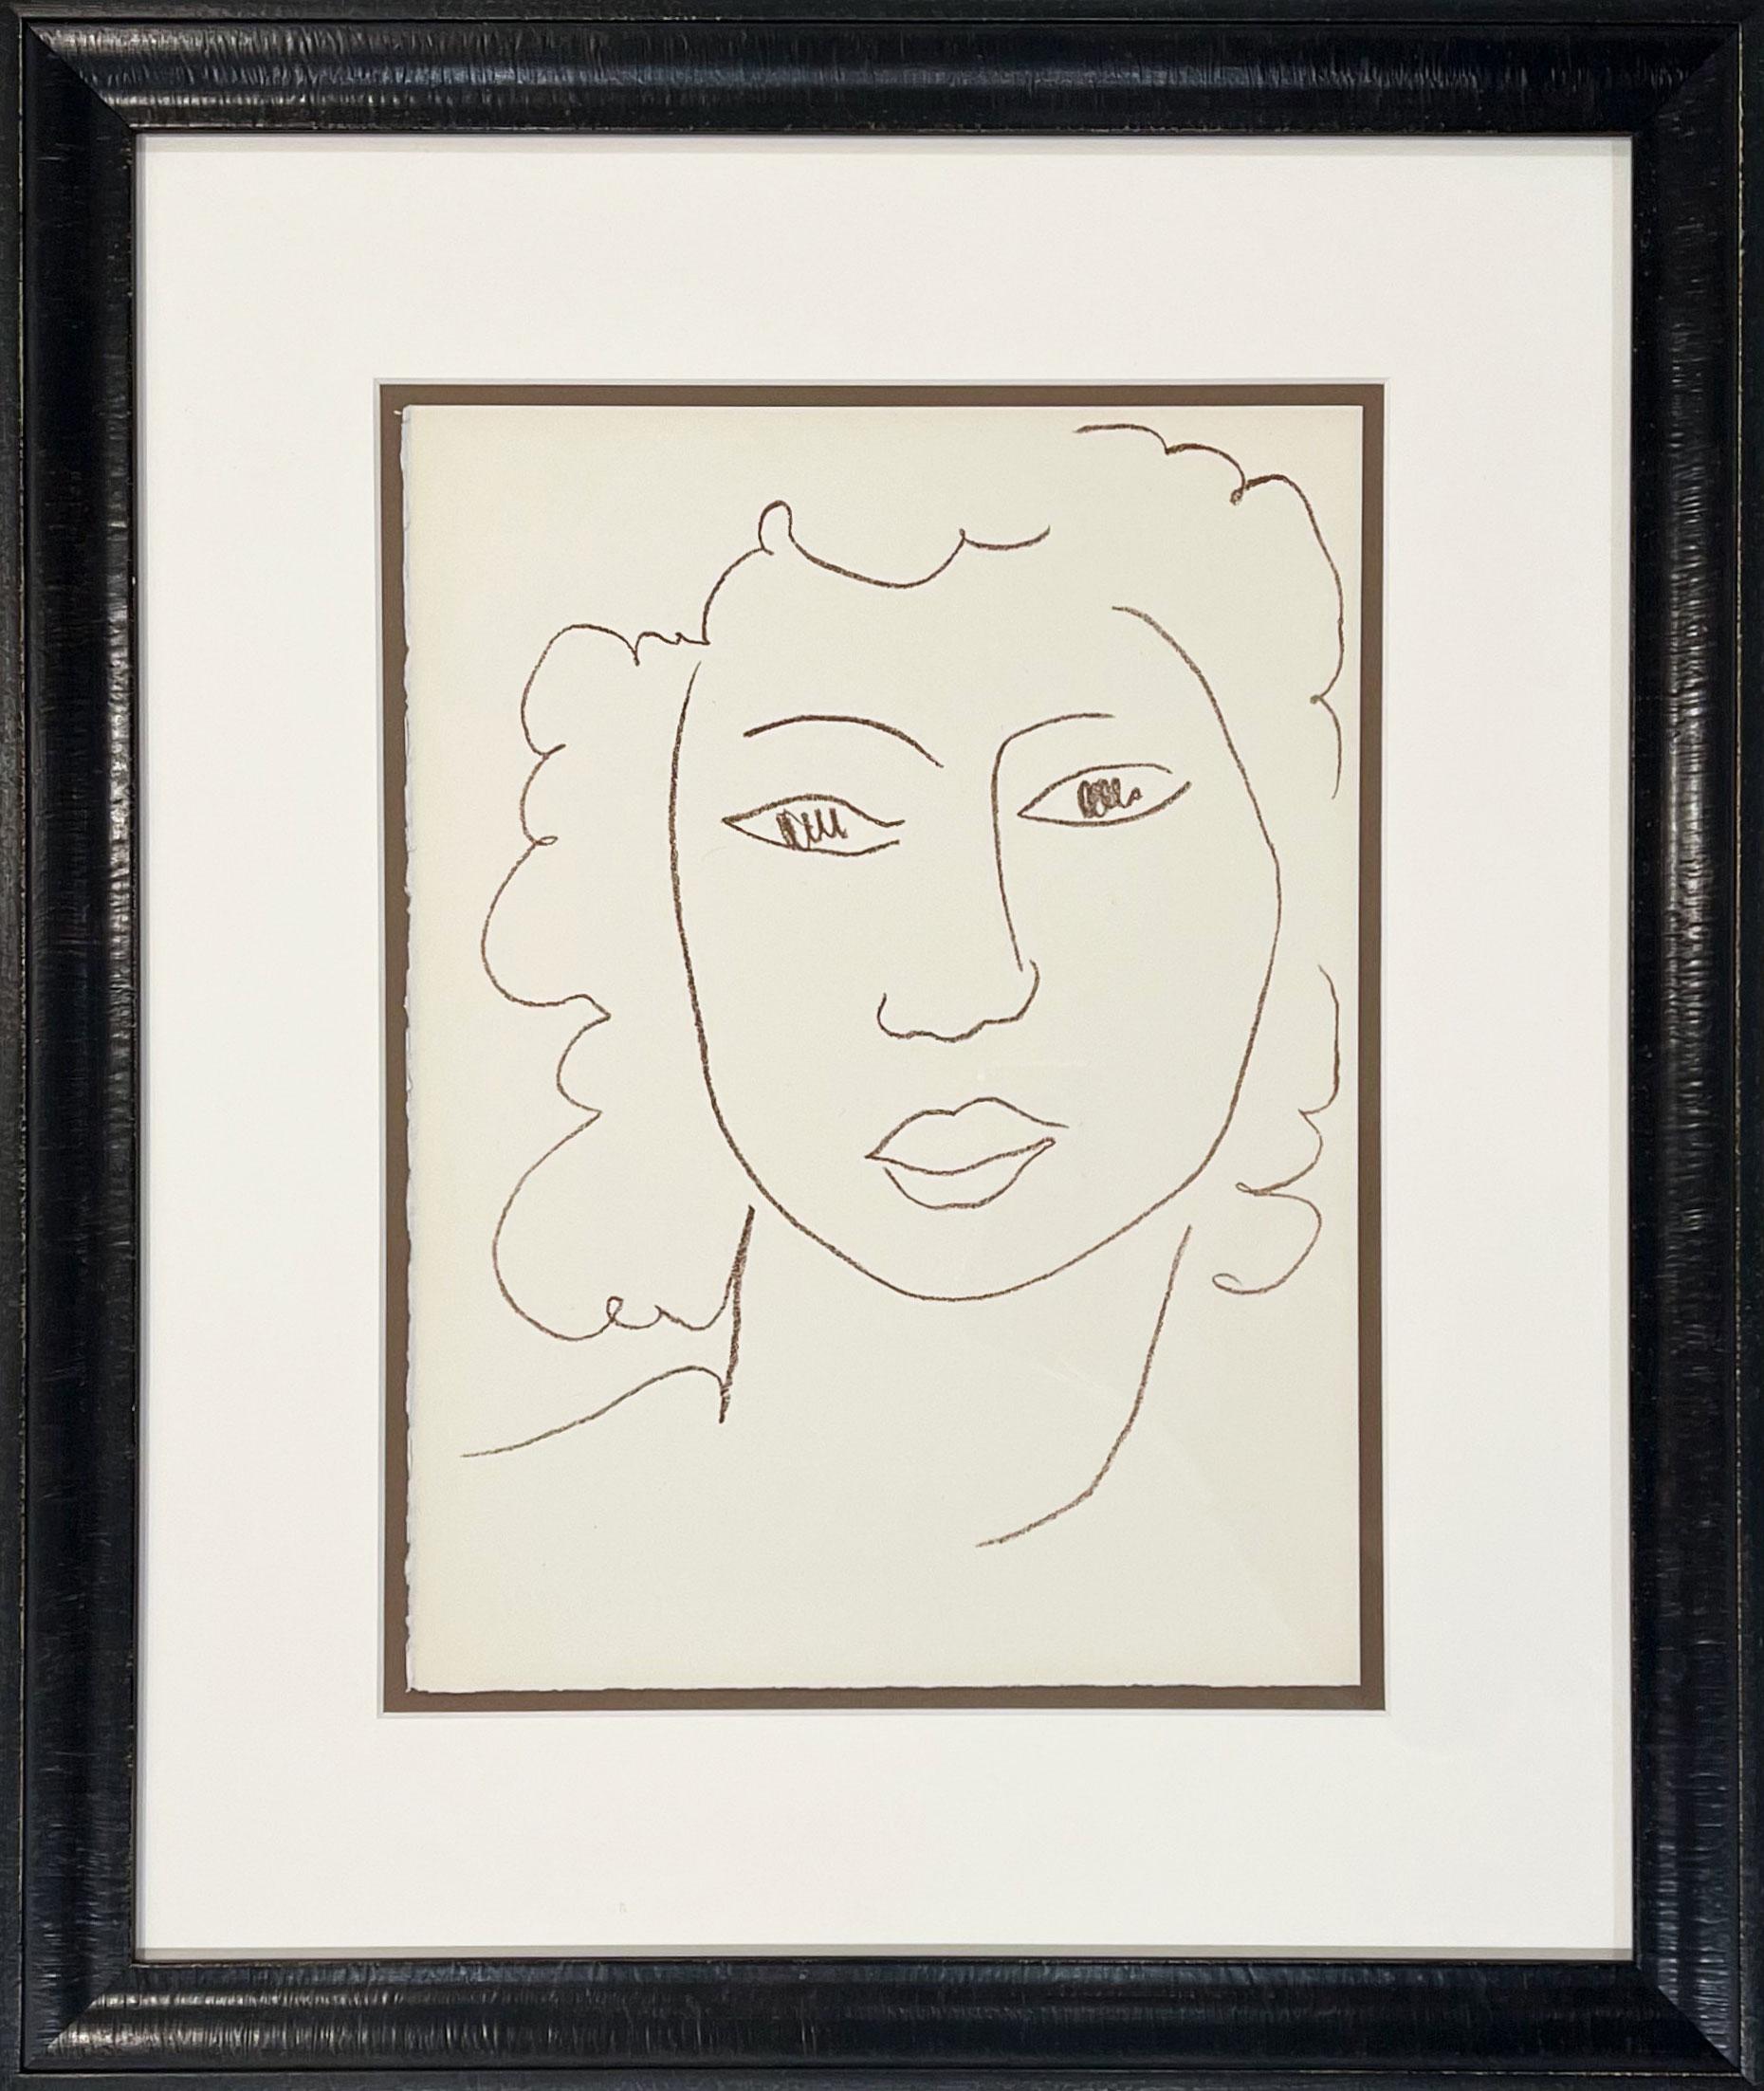 Artist: Henri Matisse
Title: Marine
Portfolio: Poesies Antillaises
Medium: Lithograph
Year: 1972
Edition: 250
Frame Size: 24